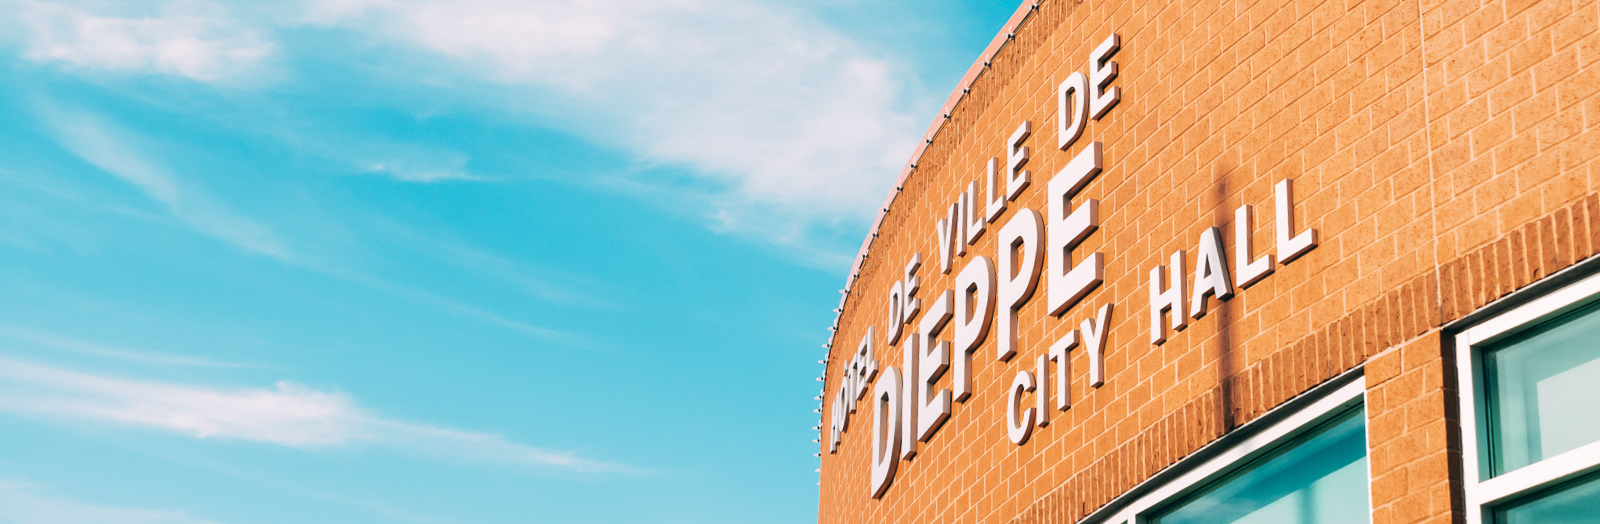 Dieppe City Hall